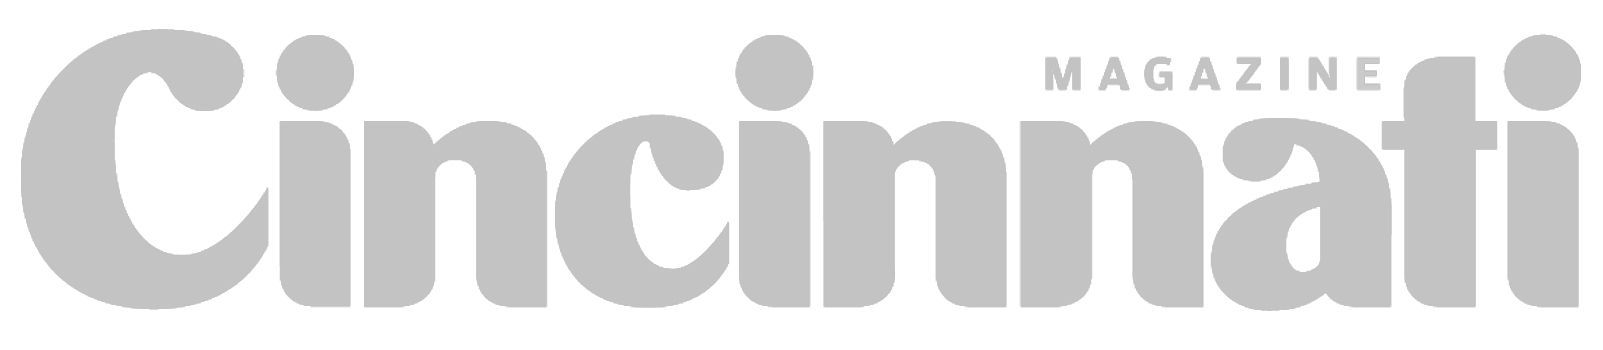 Cincinnati-logo-white.jpg